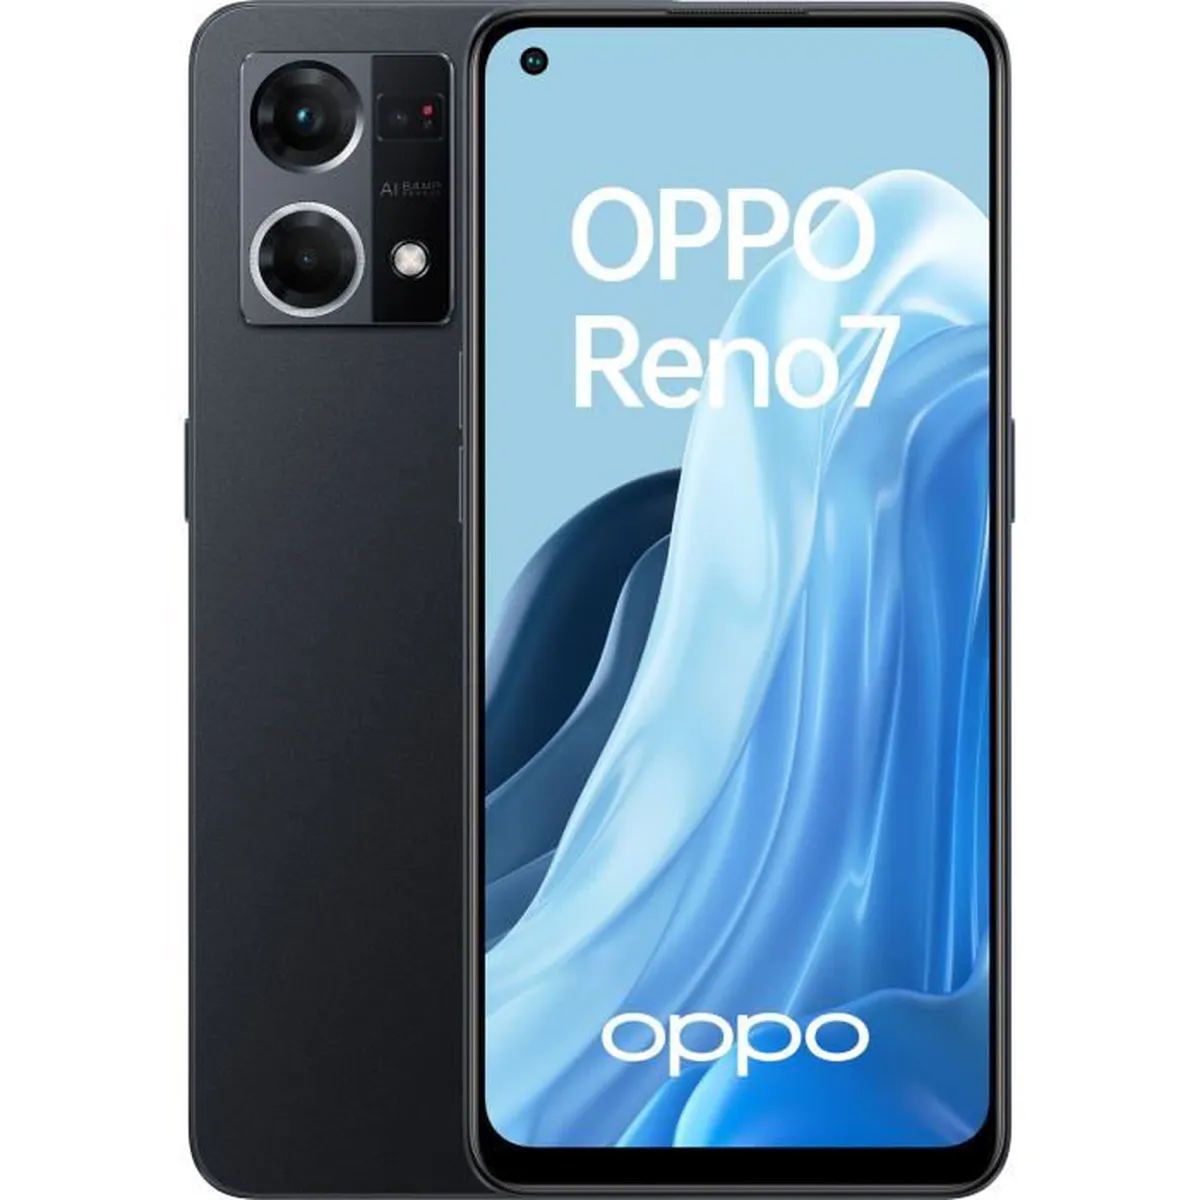 Bon plan :&nbsp;le nouveau smartphone&nbsp;Oppo Reno 7&nbsp;© Cdiscount